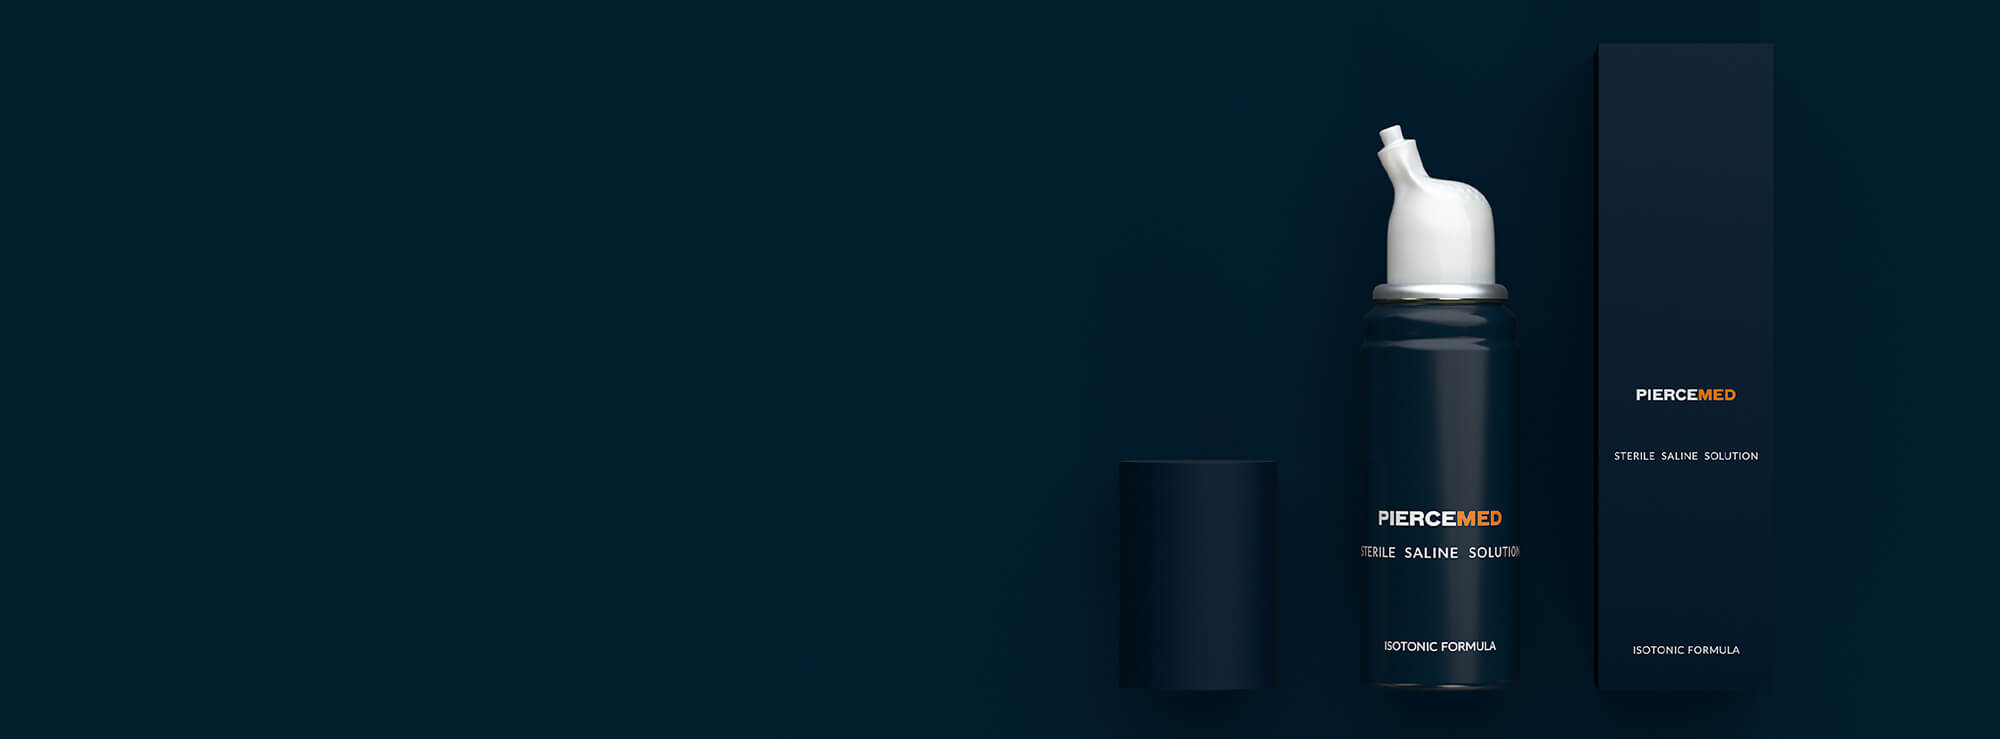 Desktop hero image showing PIERCEMED box, bottle and lid on dark blue background